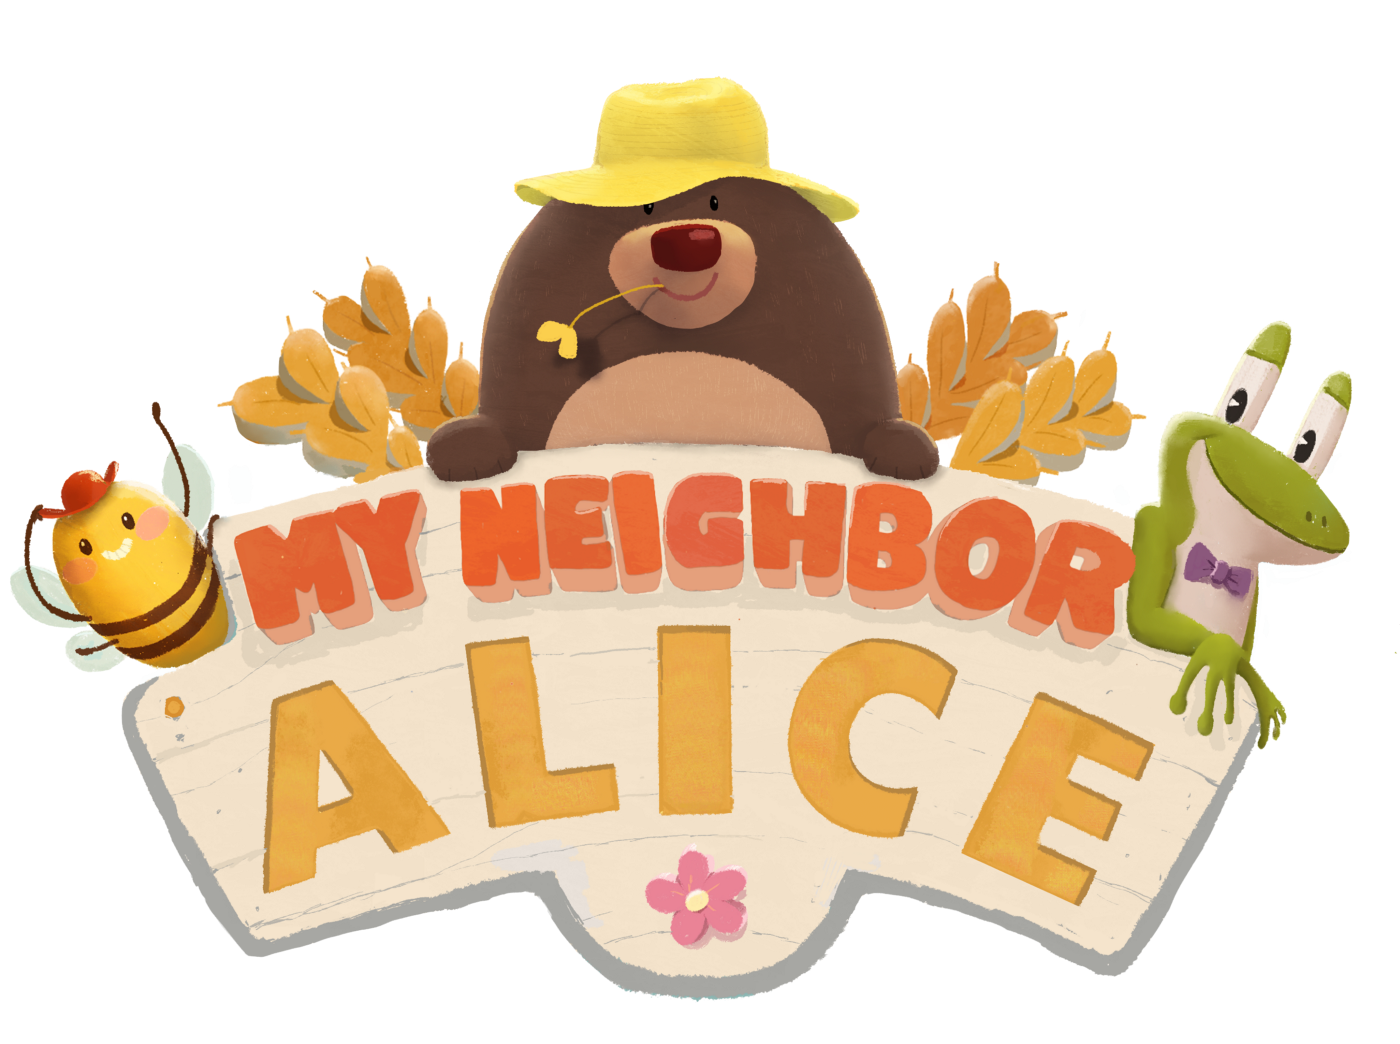 Buy My Neighbour Alice